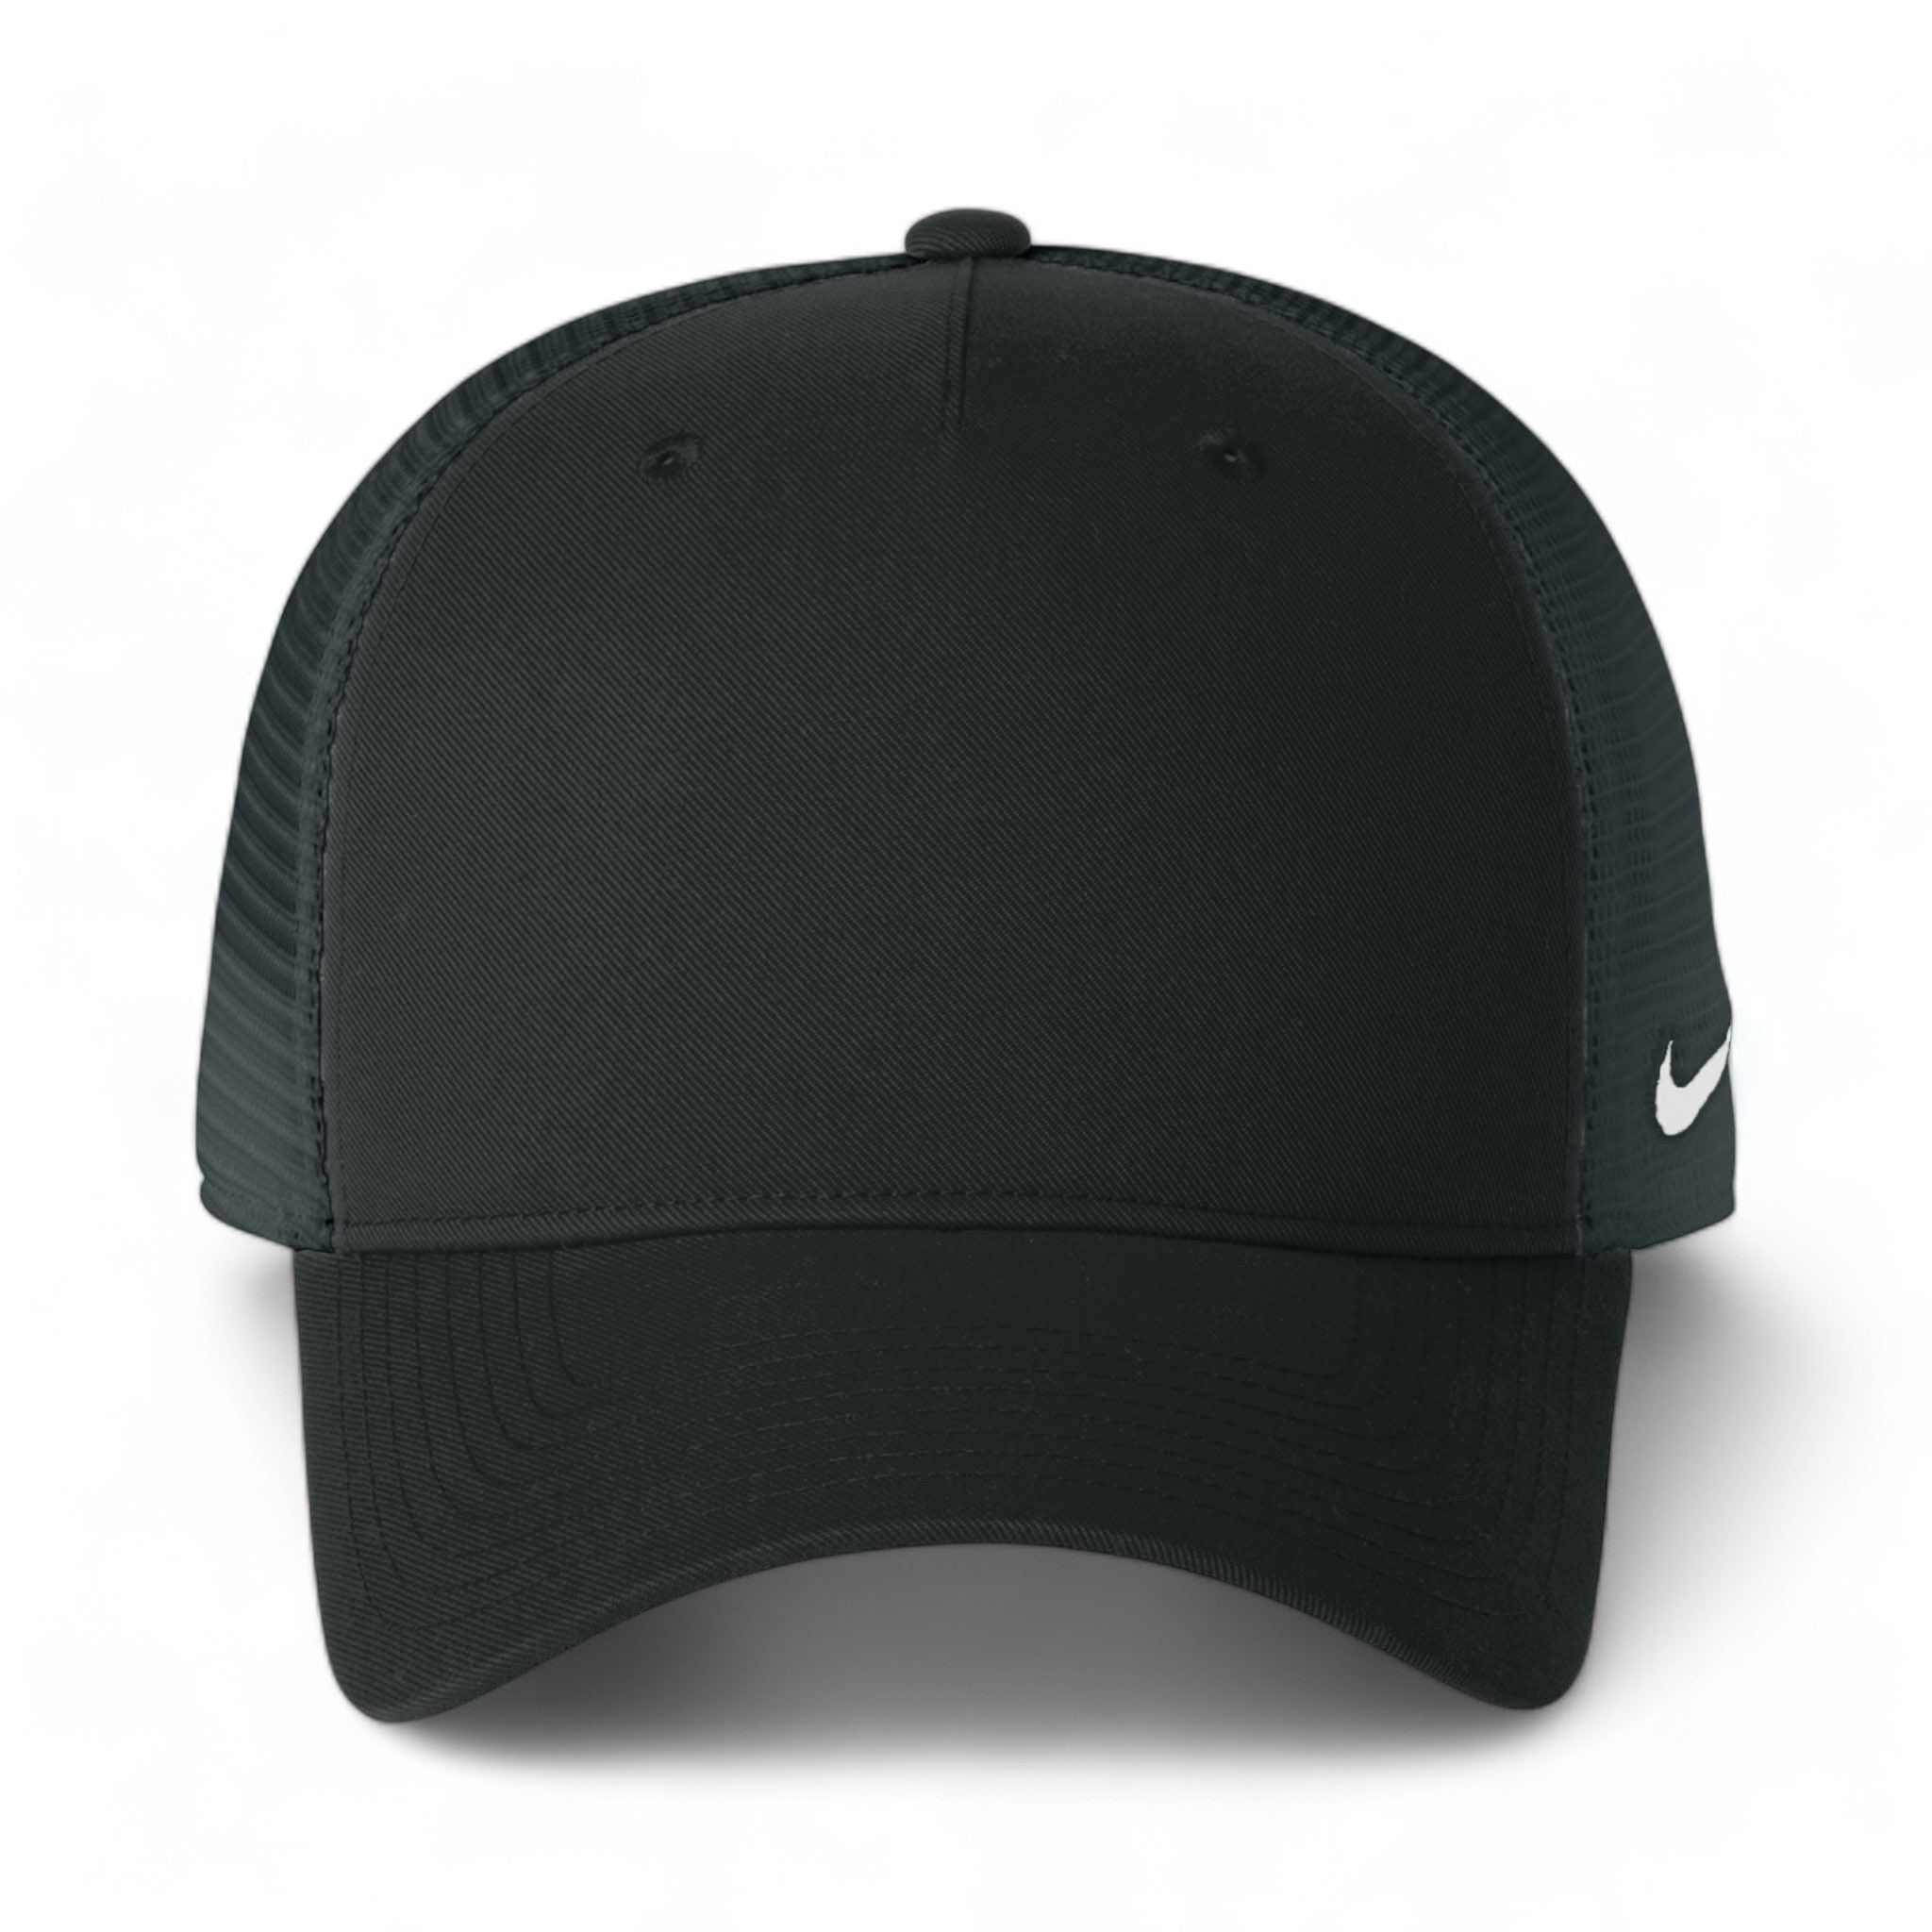 Front view of Nike NKFN9893 custom hat in black and dark grey